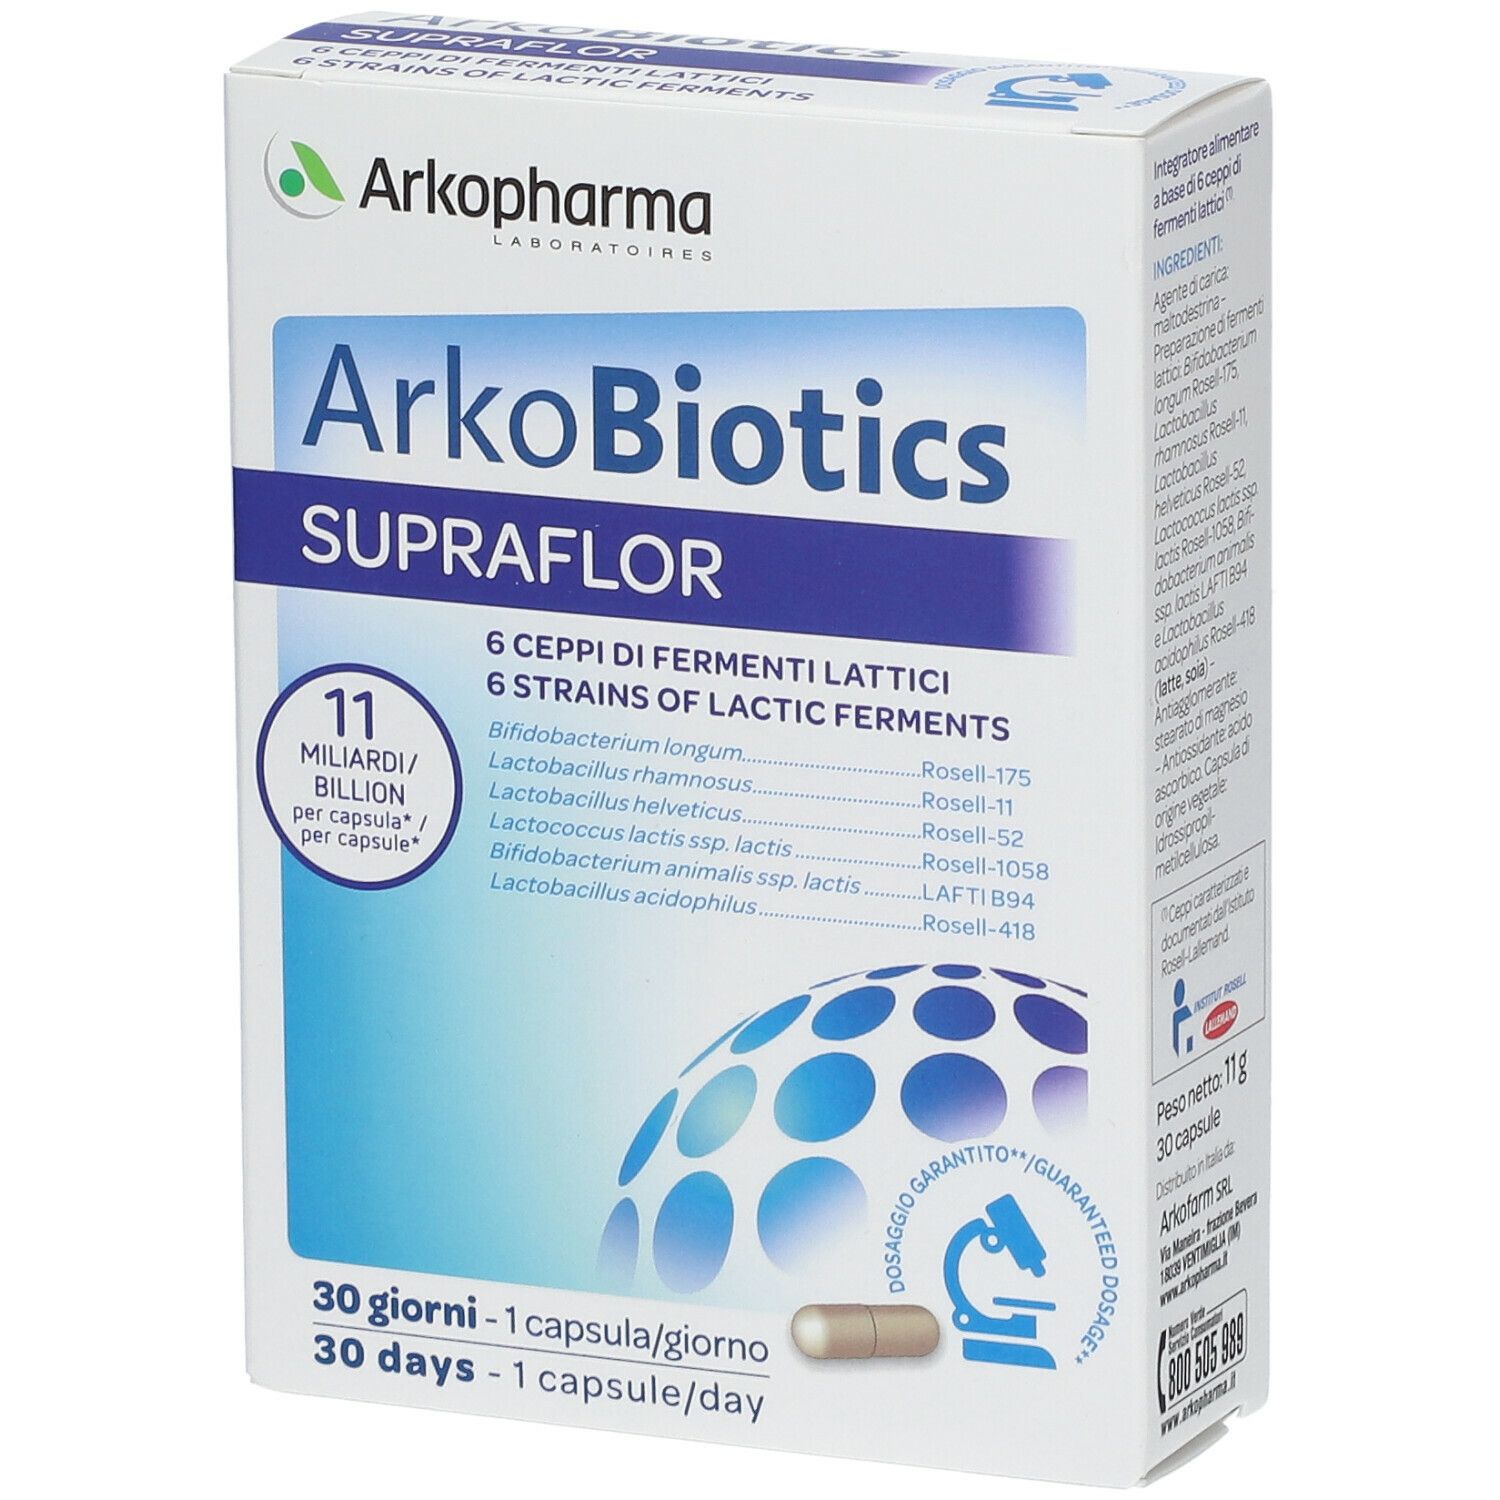 Arkopharma ArkoBiotics Supraflor